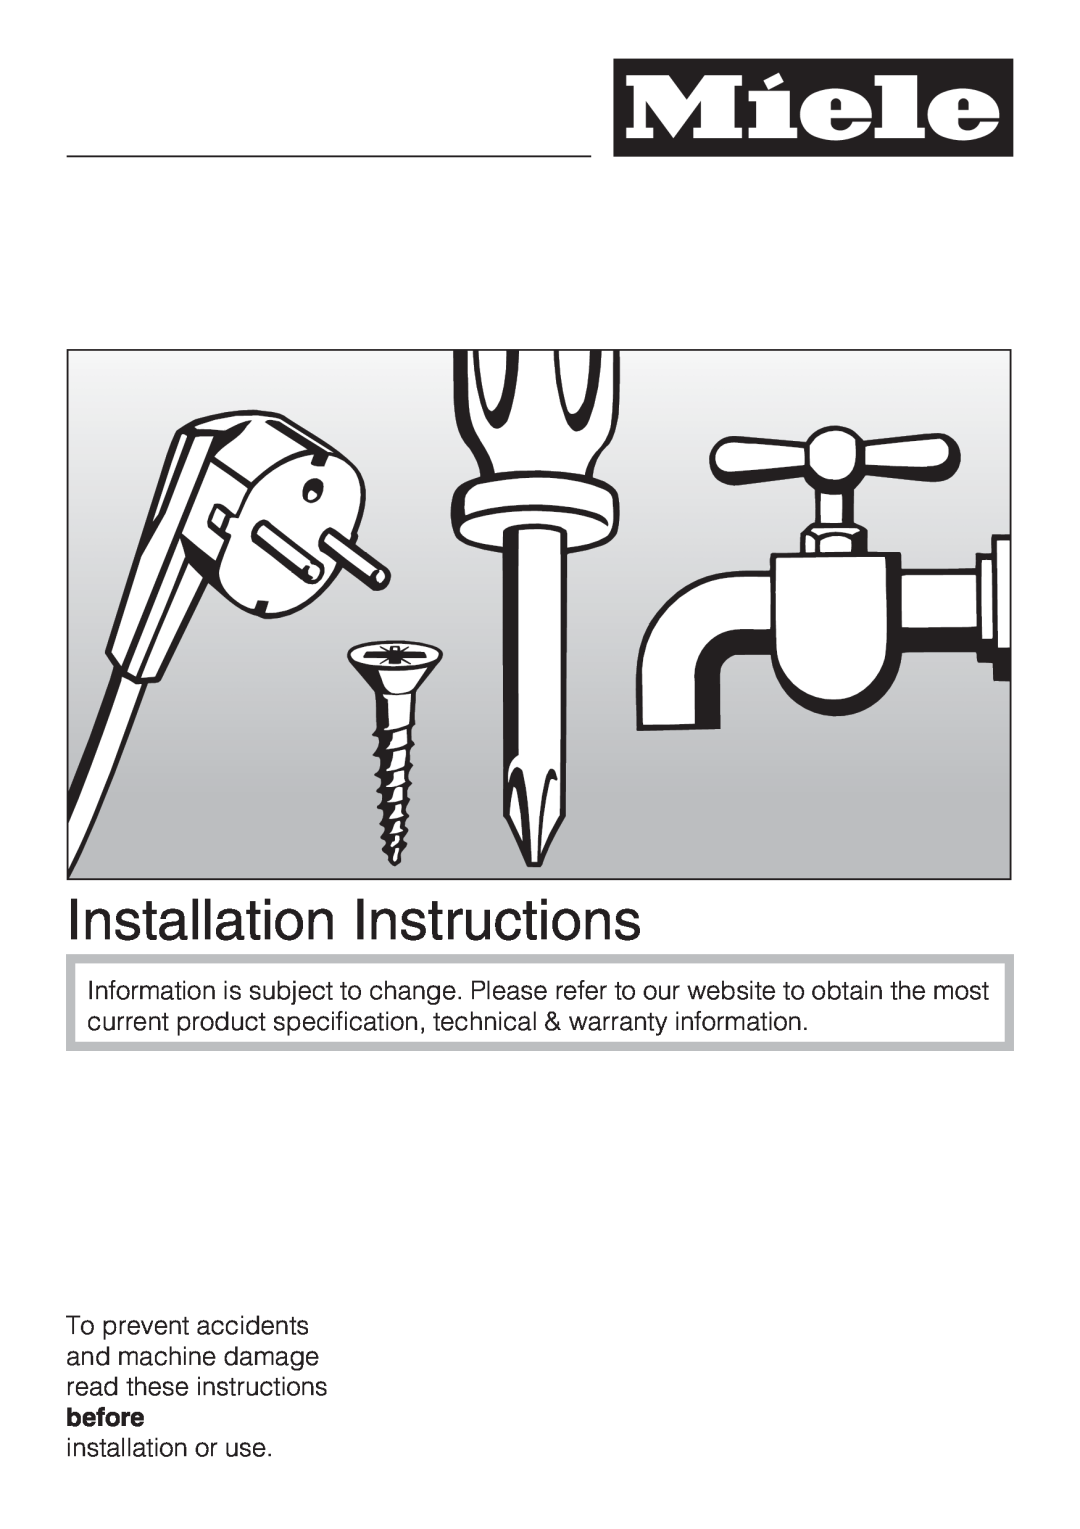 Miele F 1411 Vi installation instructions Installation Instructions 